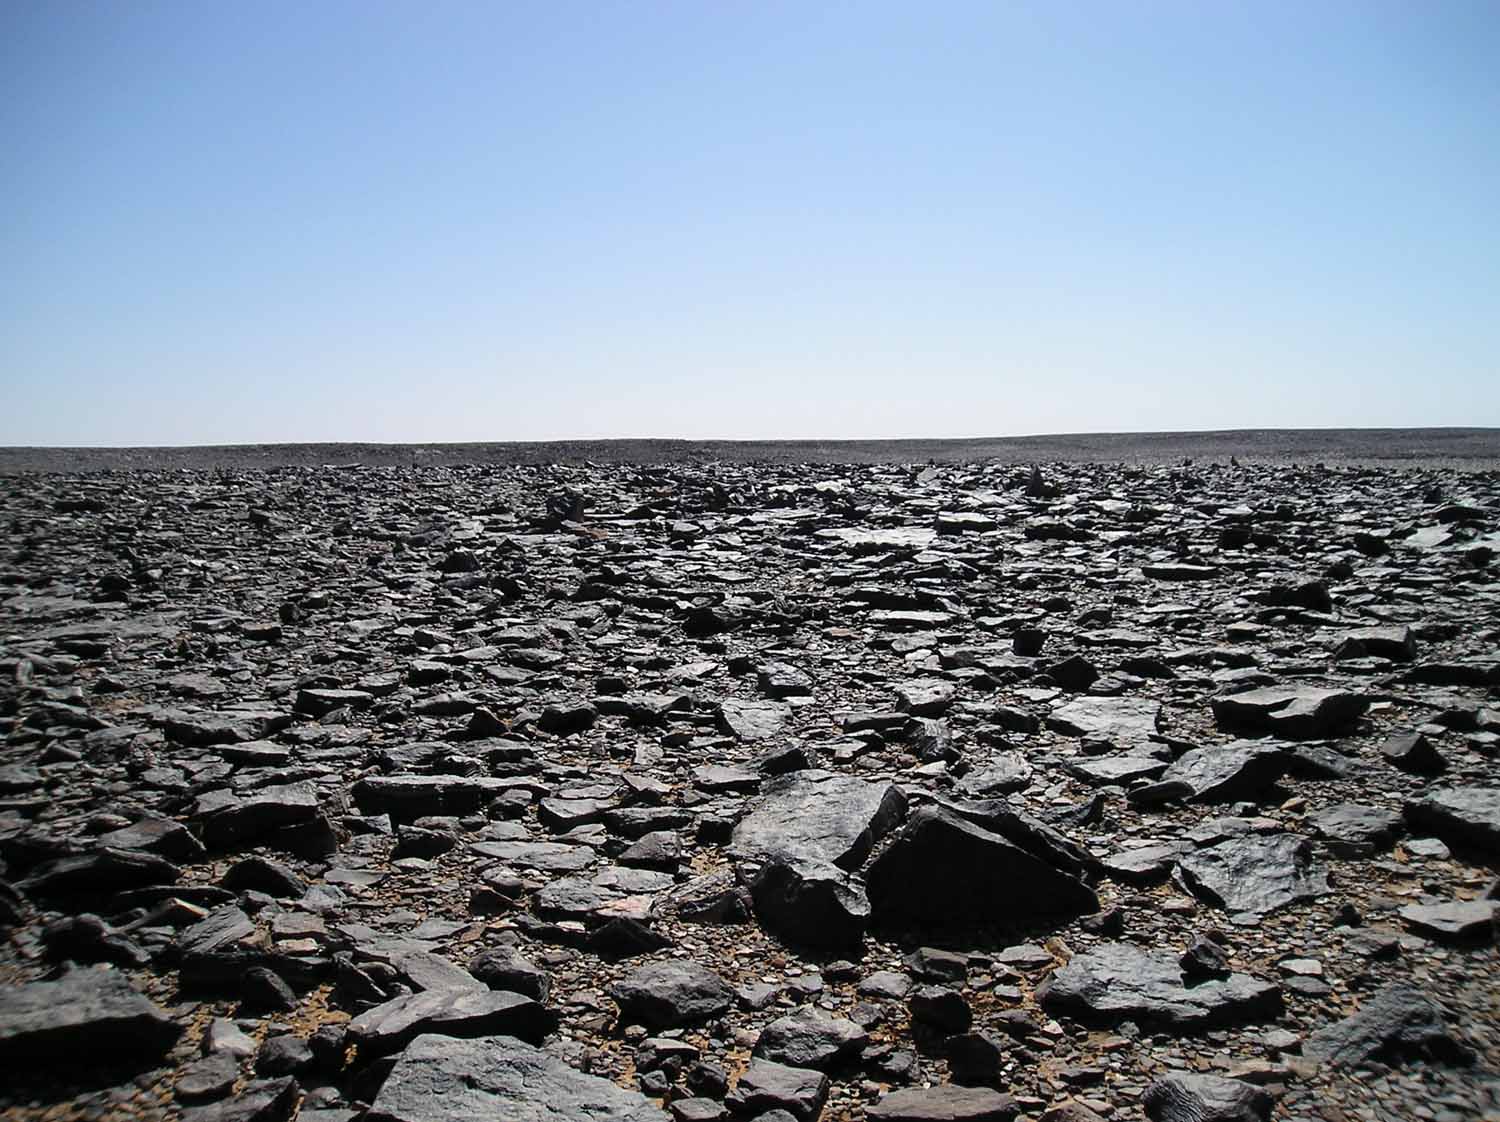 The black desert in the Libyan Sahara - Desert varnish makes the rocks go black - (c) followmefaraway.com